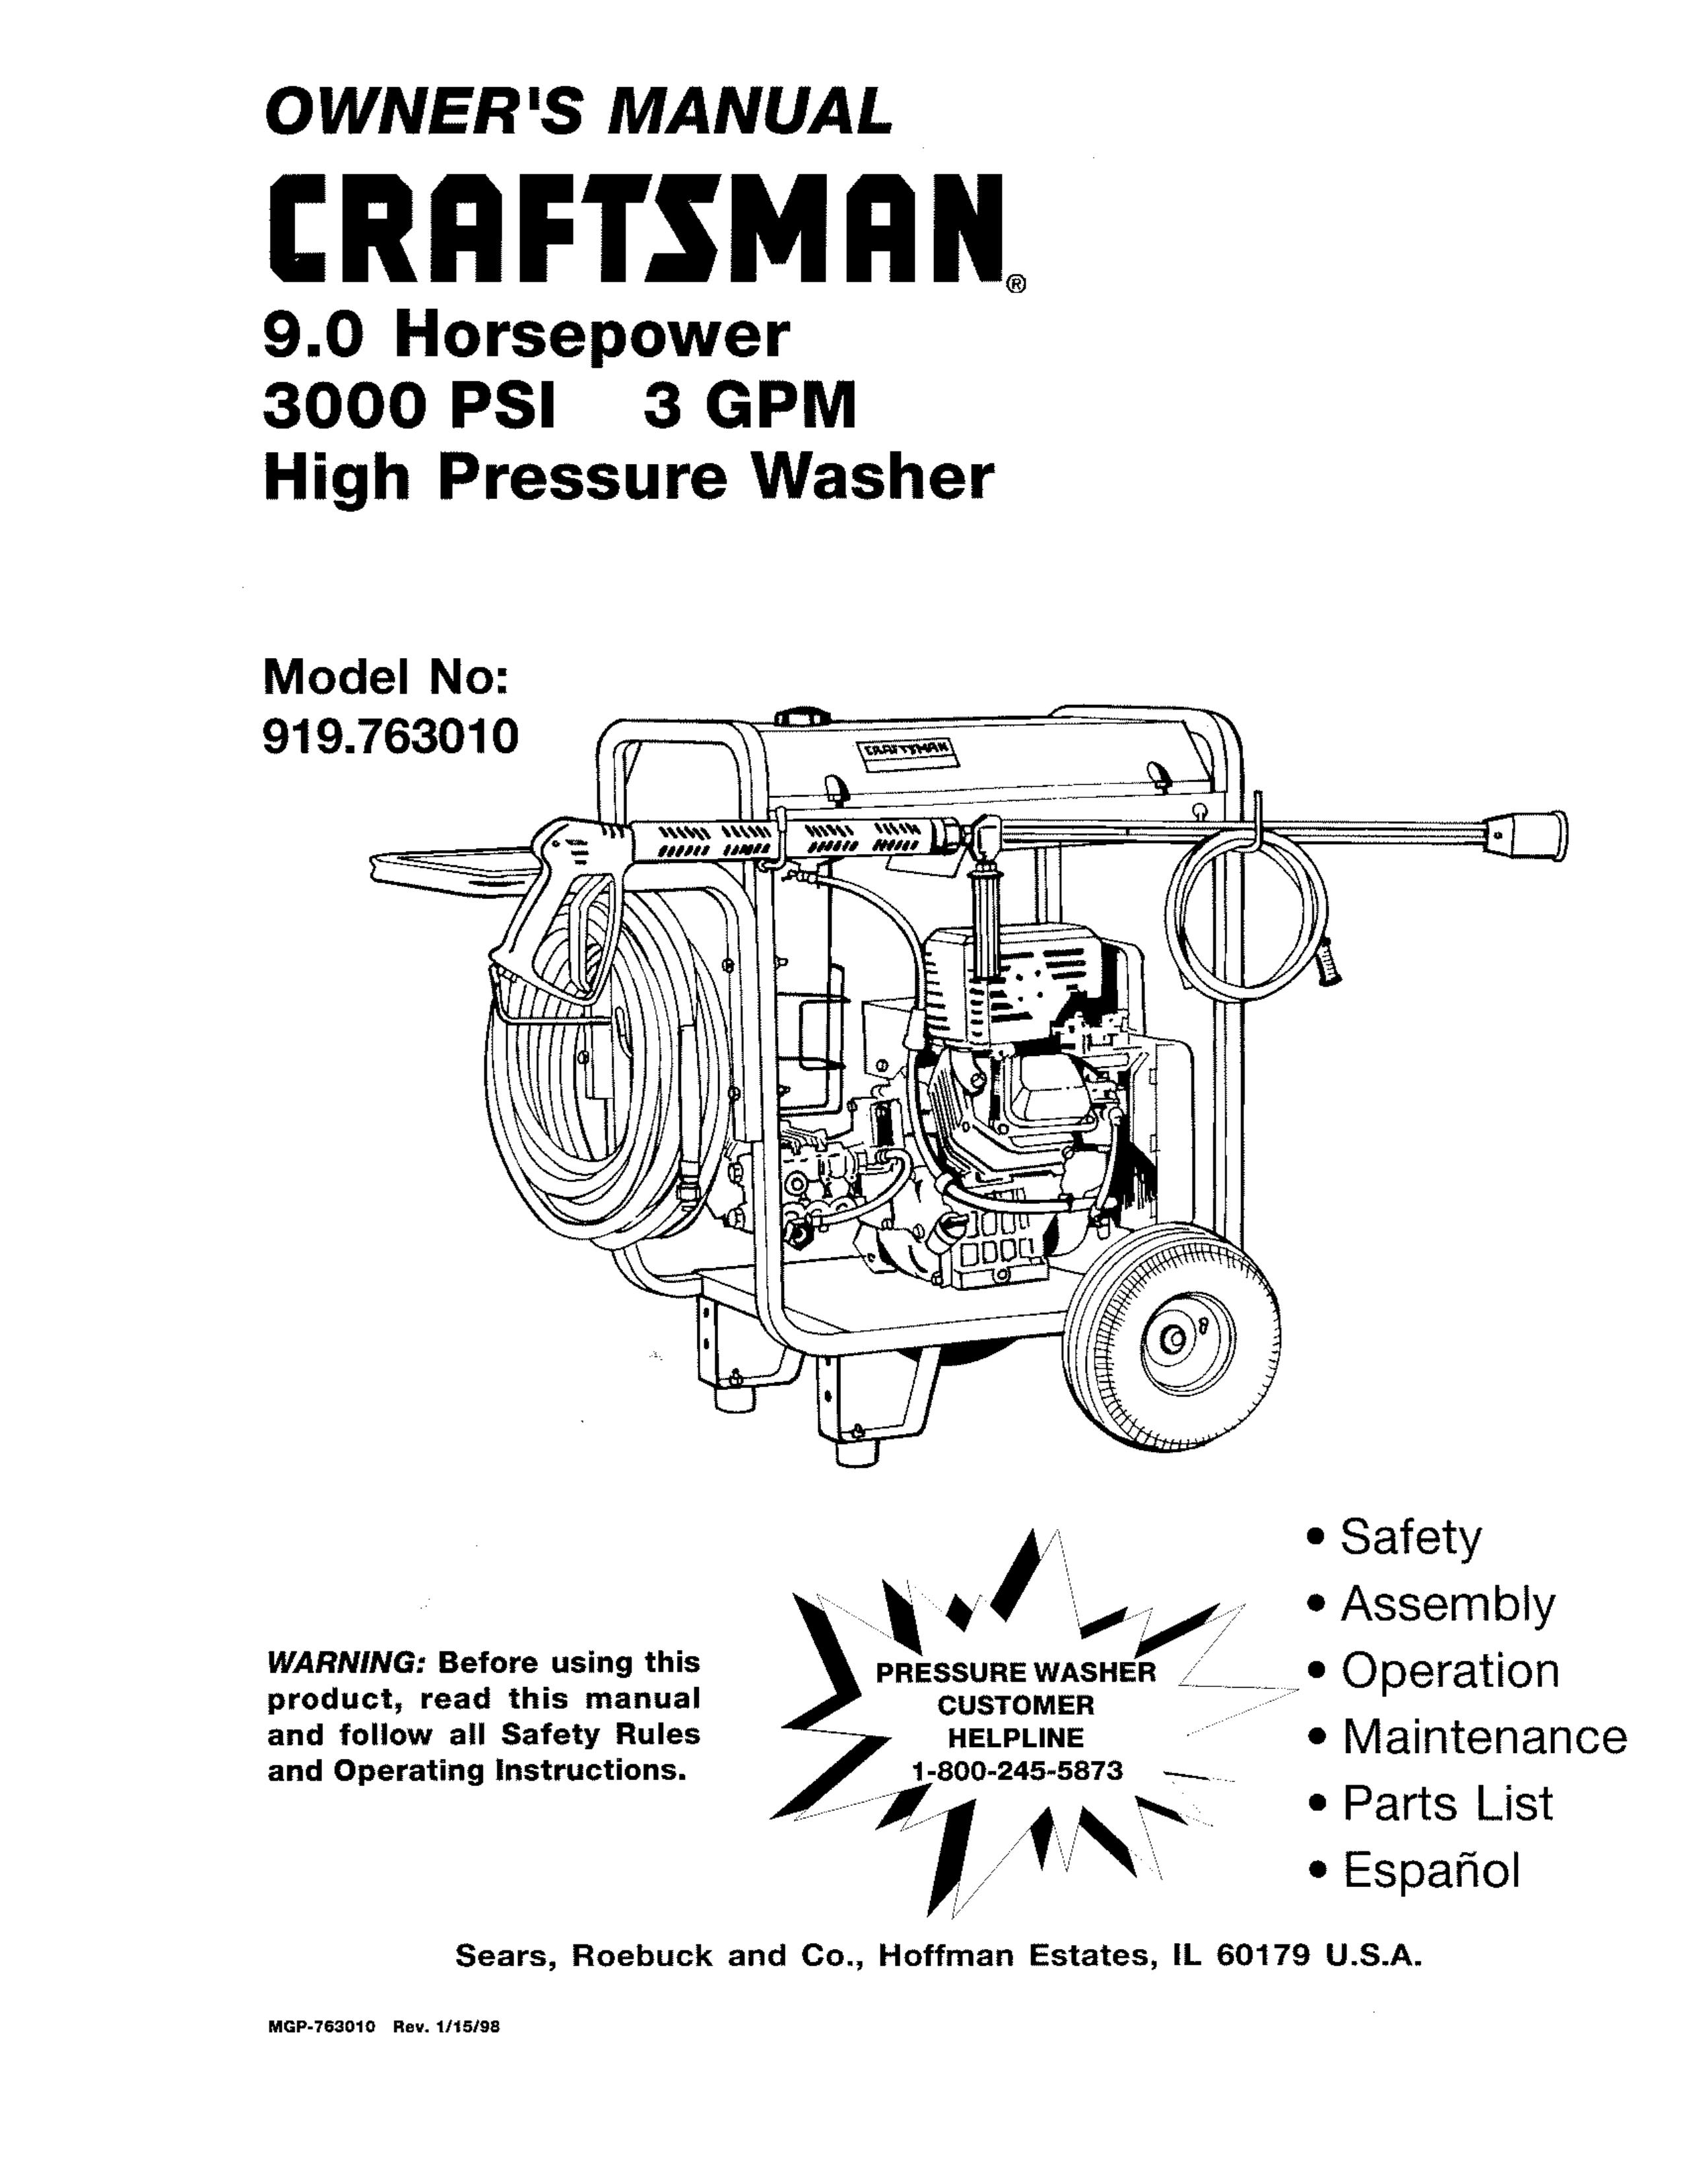 Craftsman 919.763010 Pressure Washer User Manual